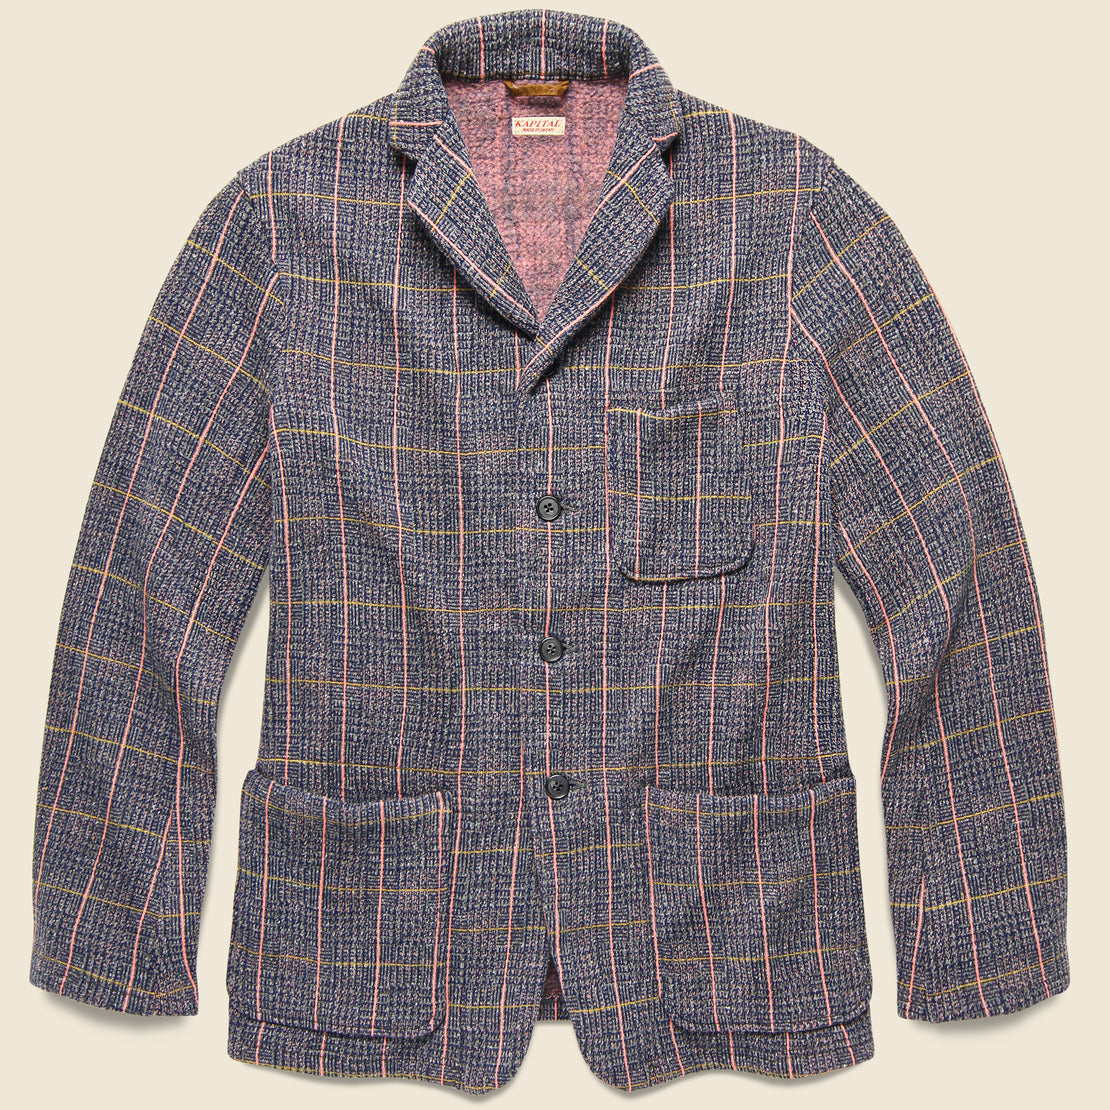 Kapital Kobe Tweed Fleecy Knit Jacket - Grey/Pink